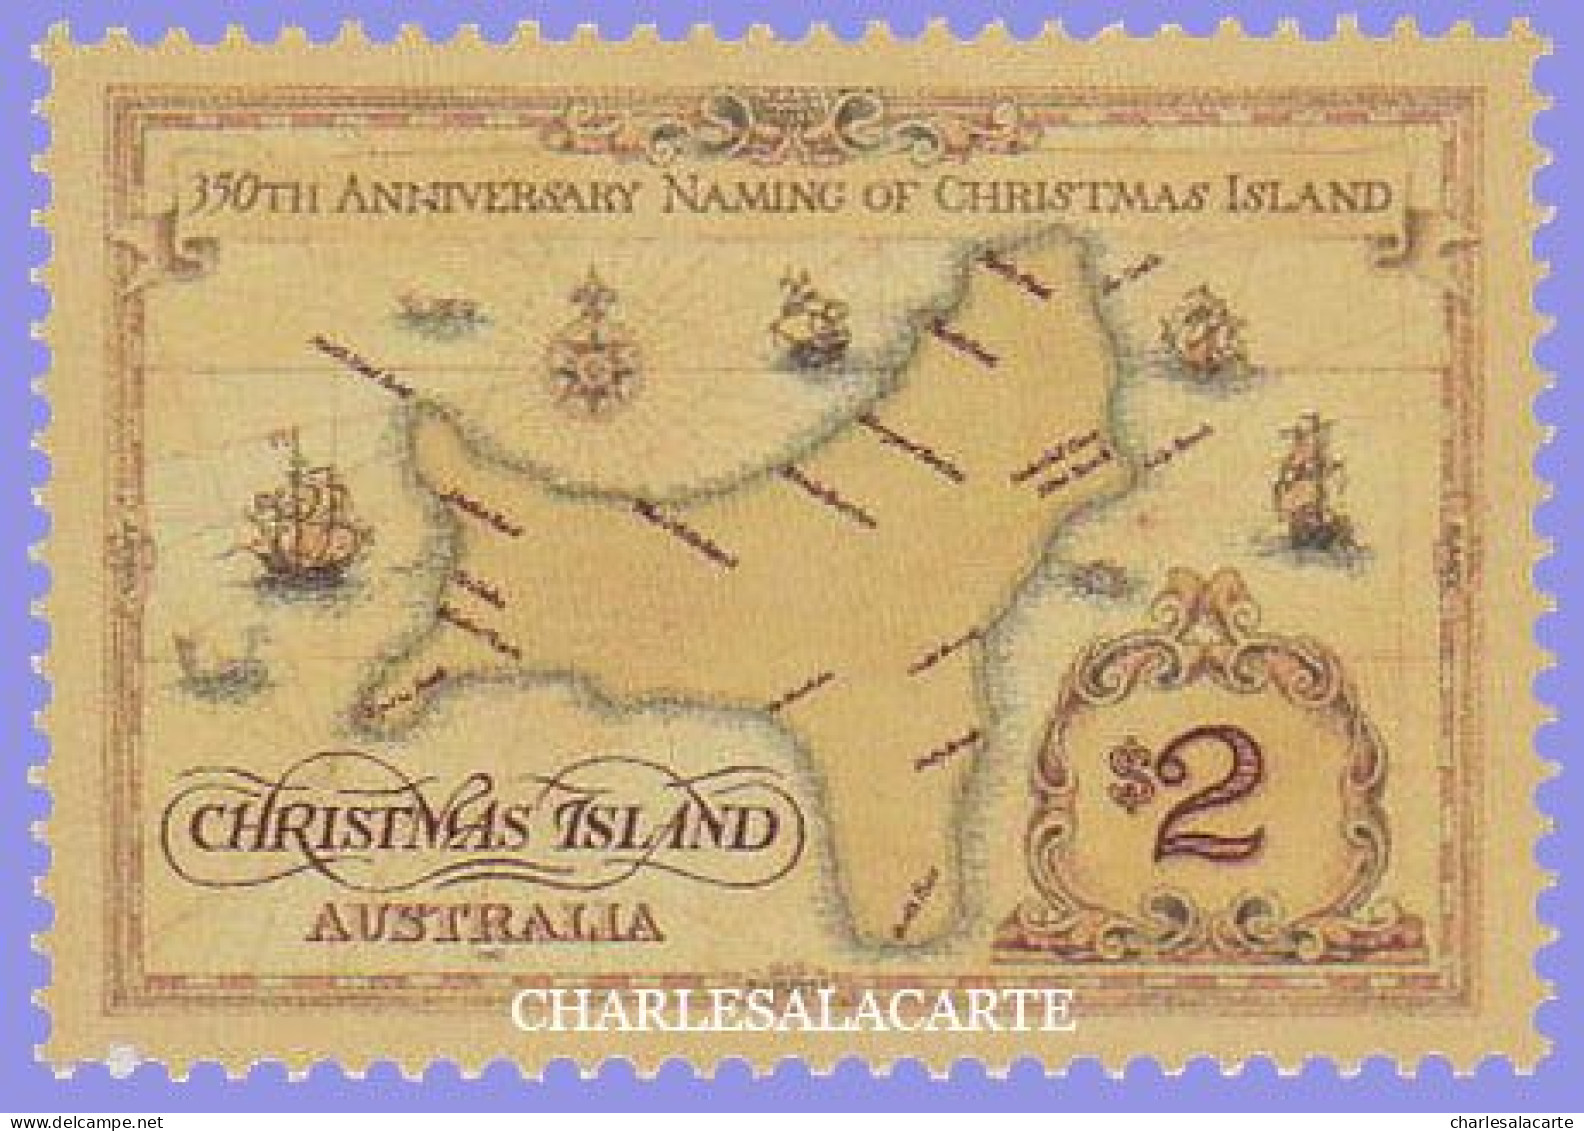 CHRISTMAS ISLAND 1993  ANNIVERSARY ISLAND NAMING  MAP  SG 385  U.M. - Christmas Island